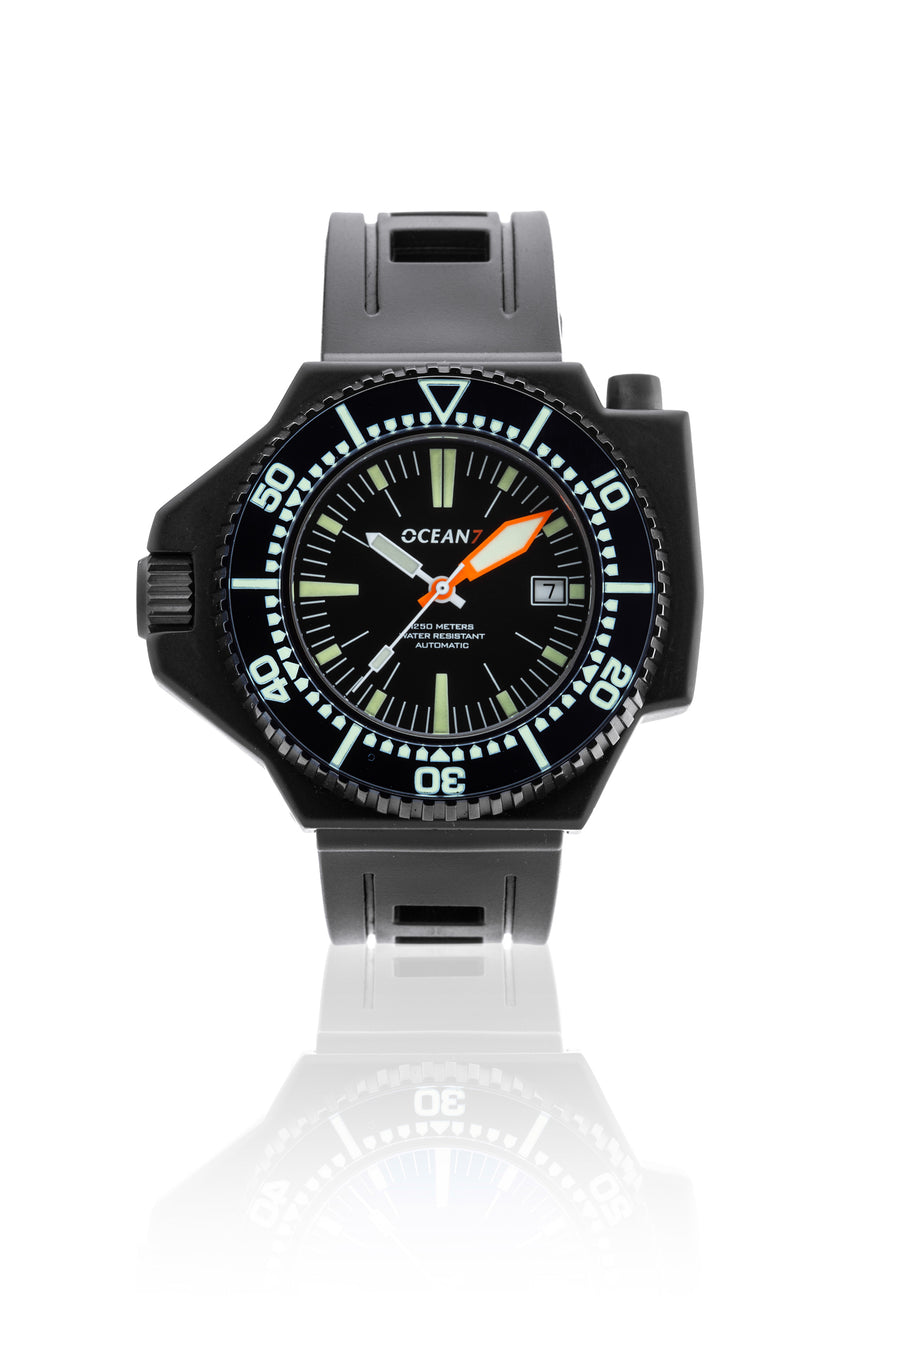 OCEAN7 Watch Company – OCEAN7 Precision Watches LLC